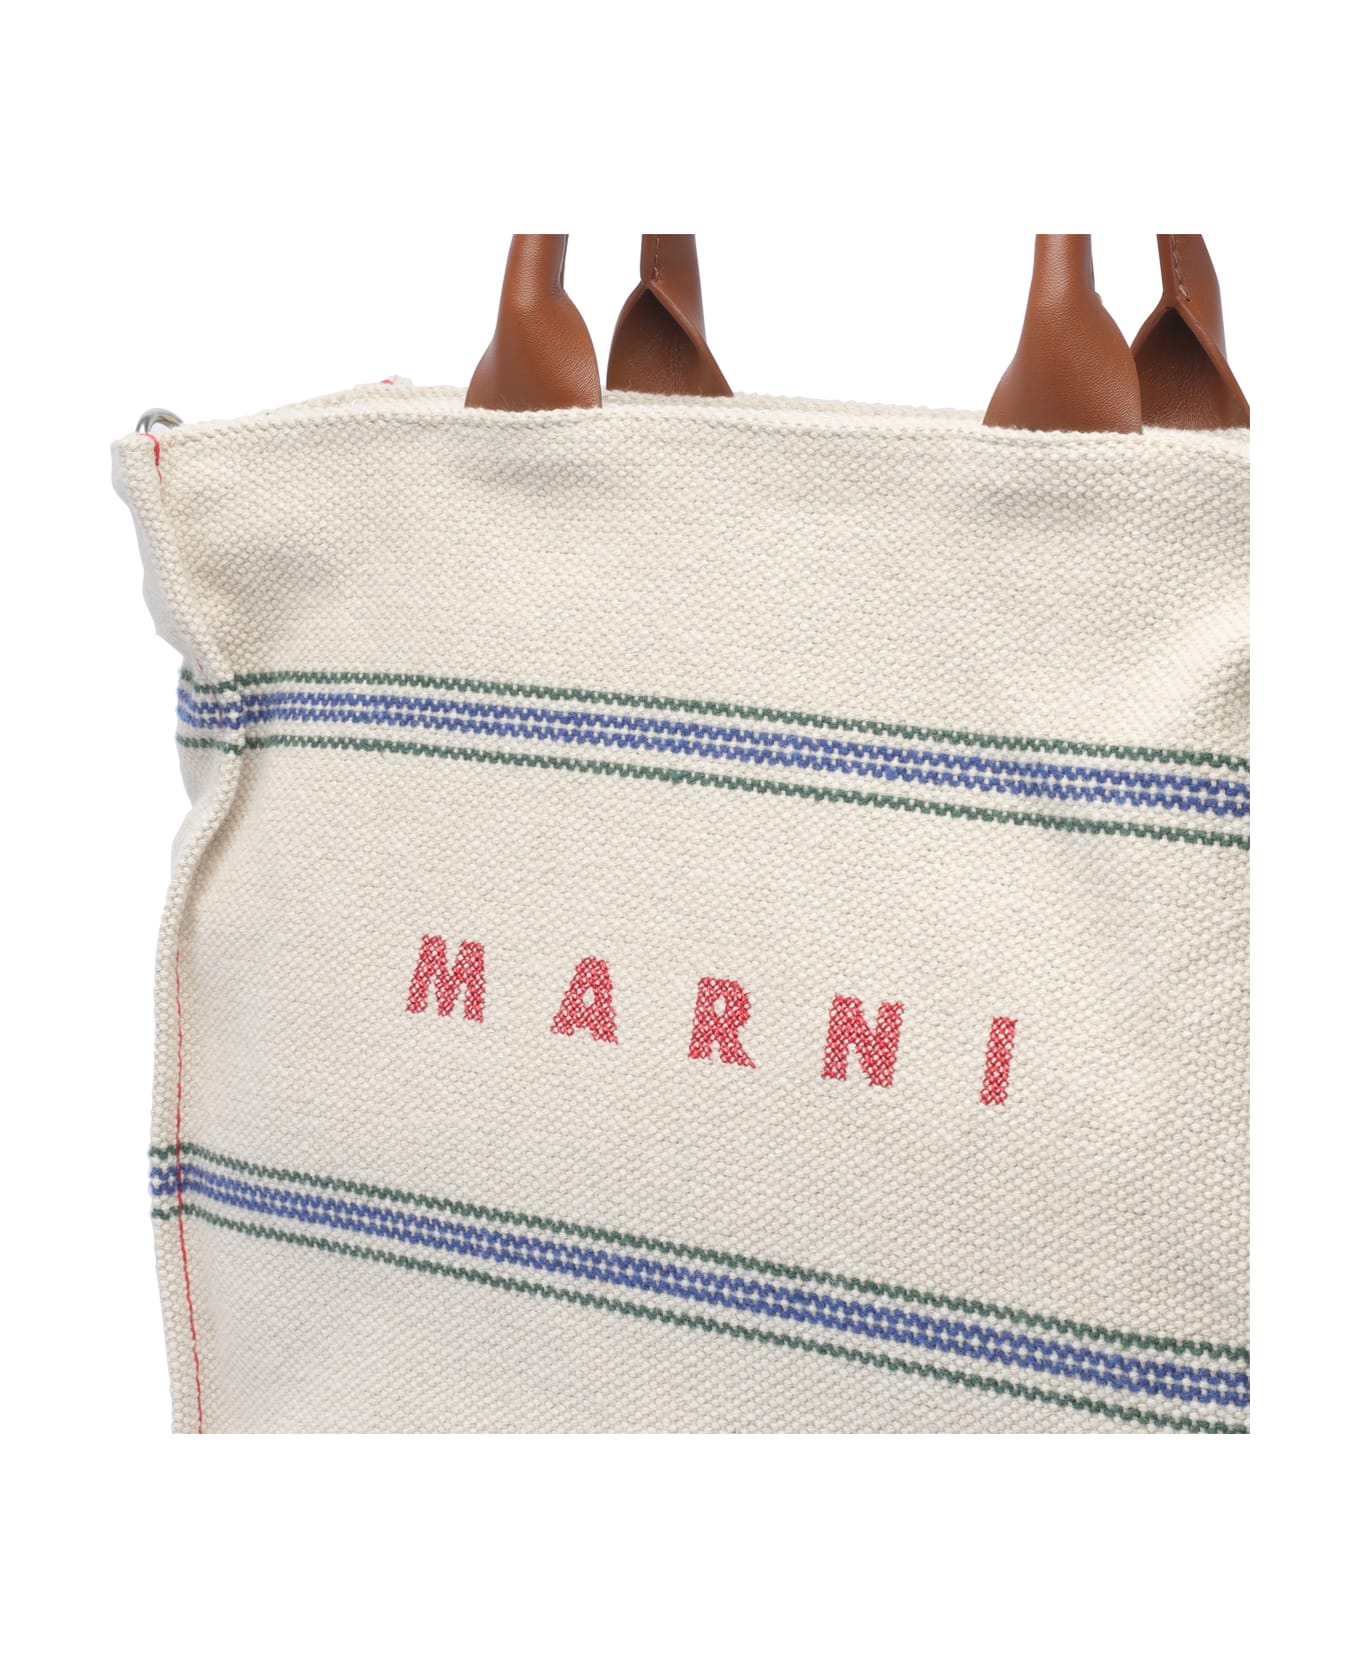 Marni Logo Shopping Bag - Beige トートバッグ